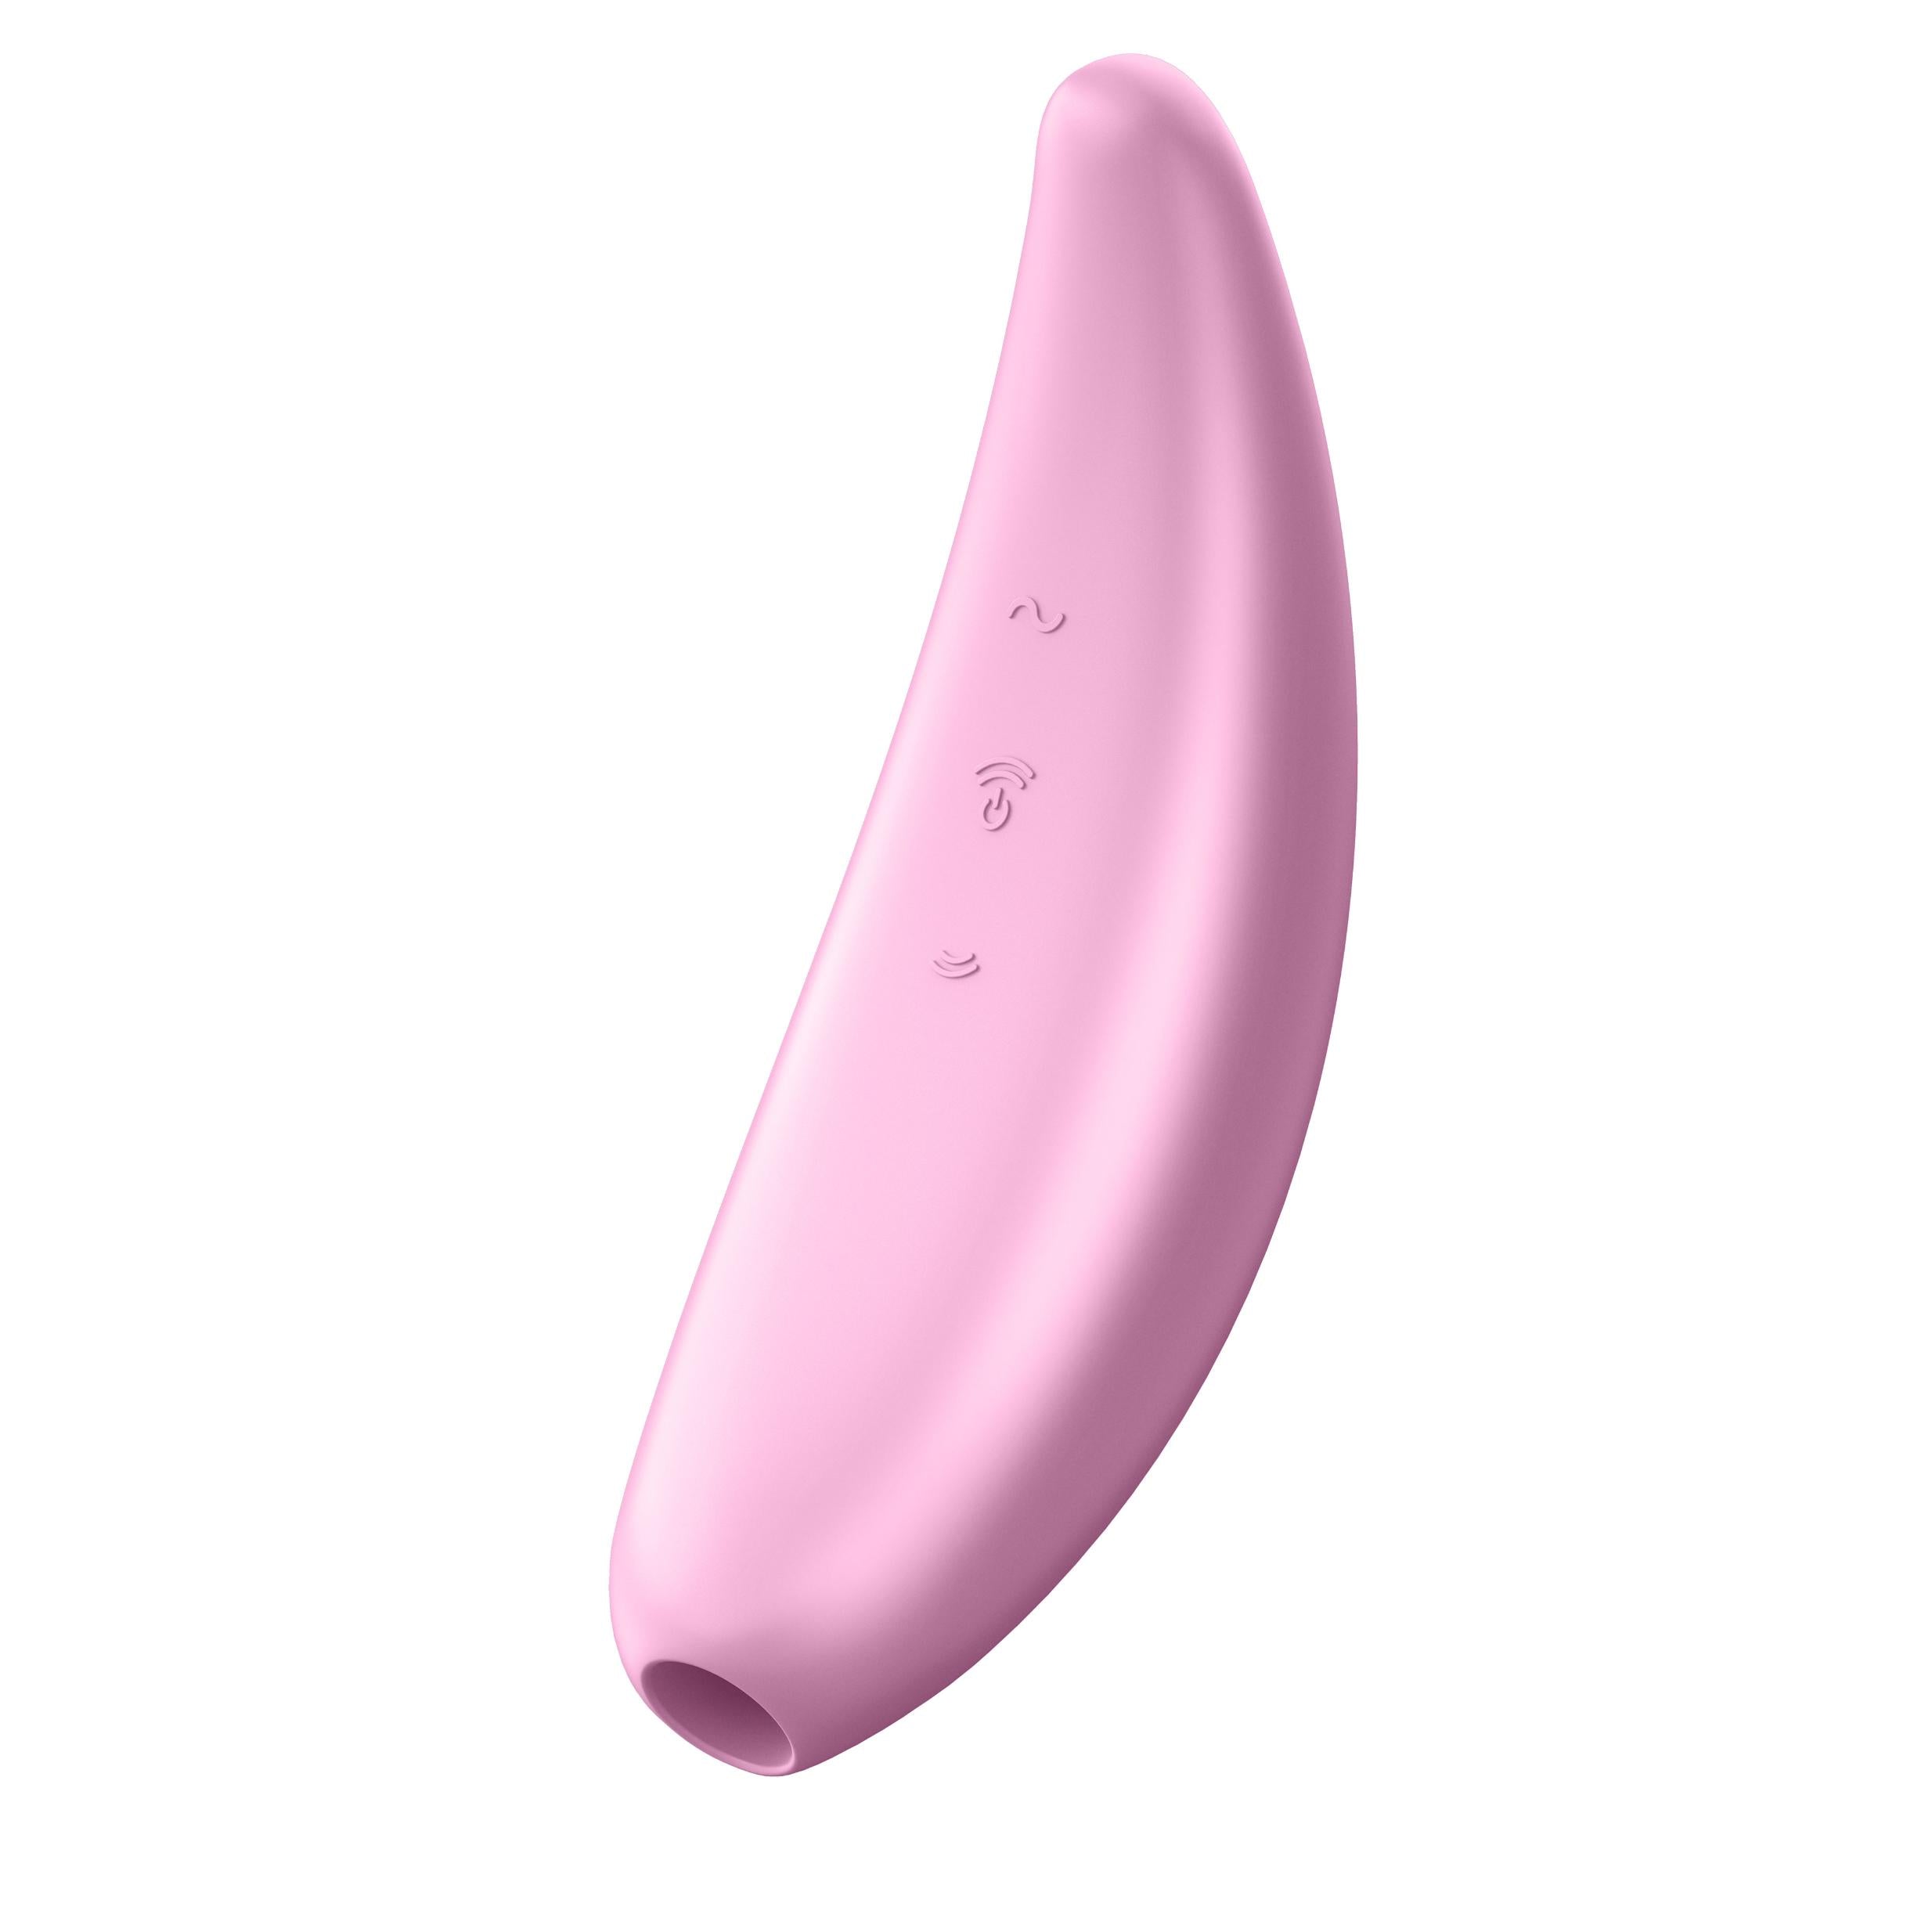 Satisfyer Curvy 3+ Pink Vibrator with App